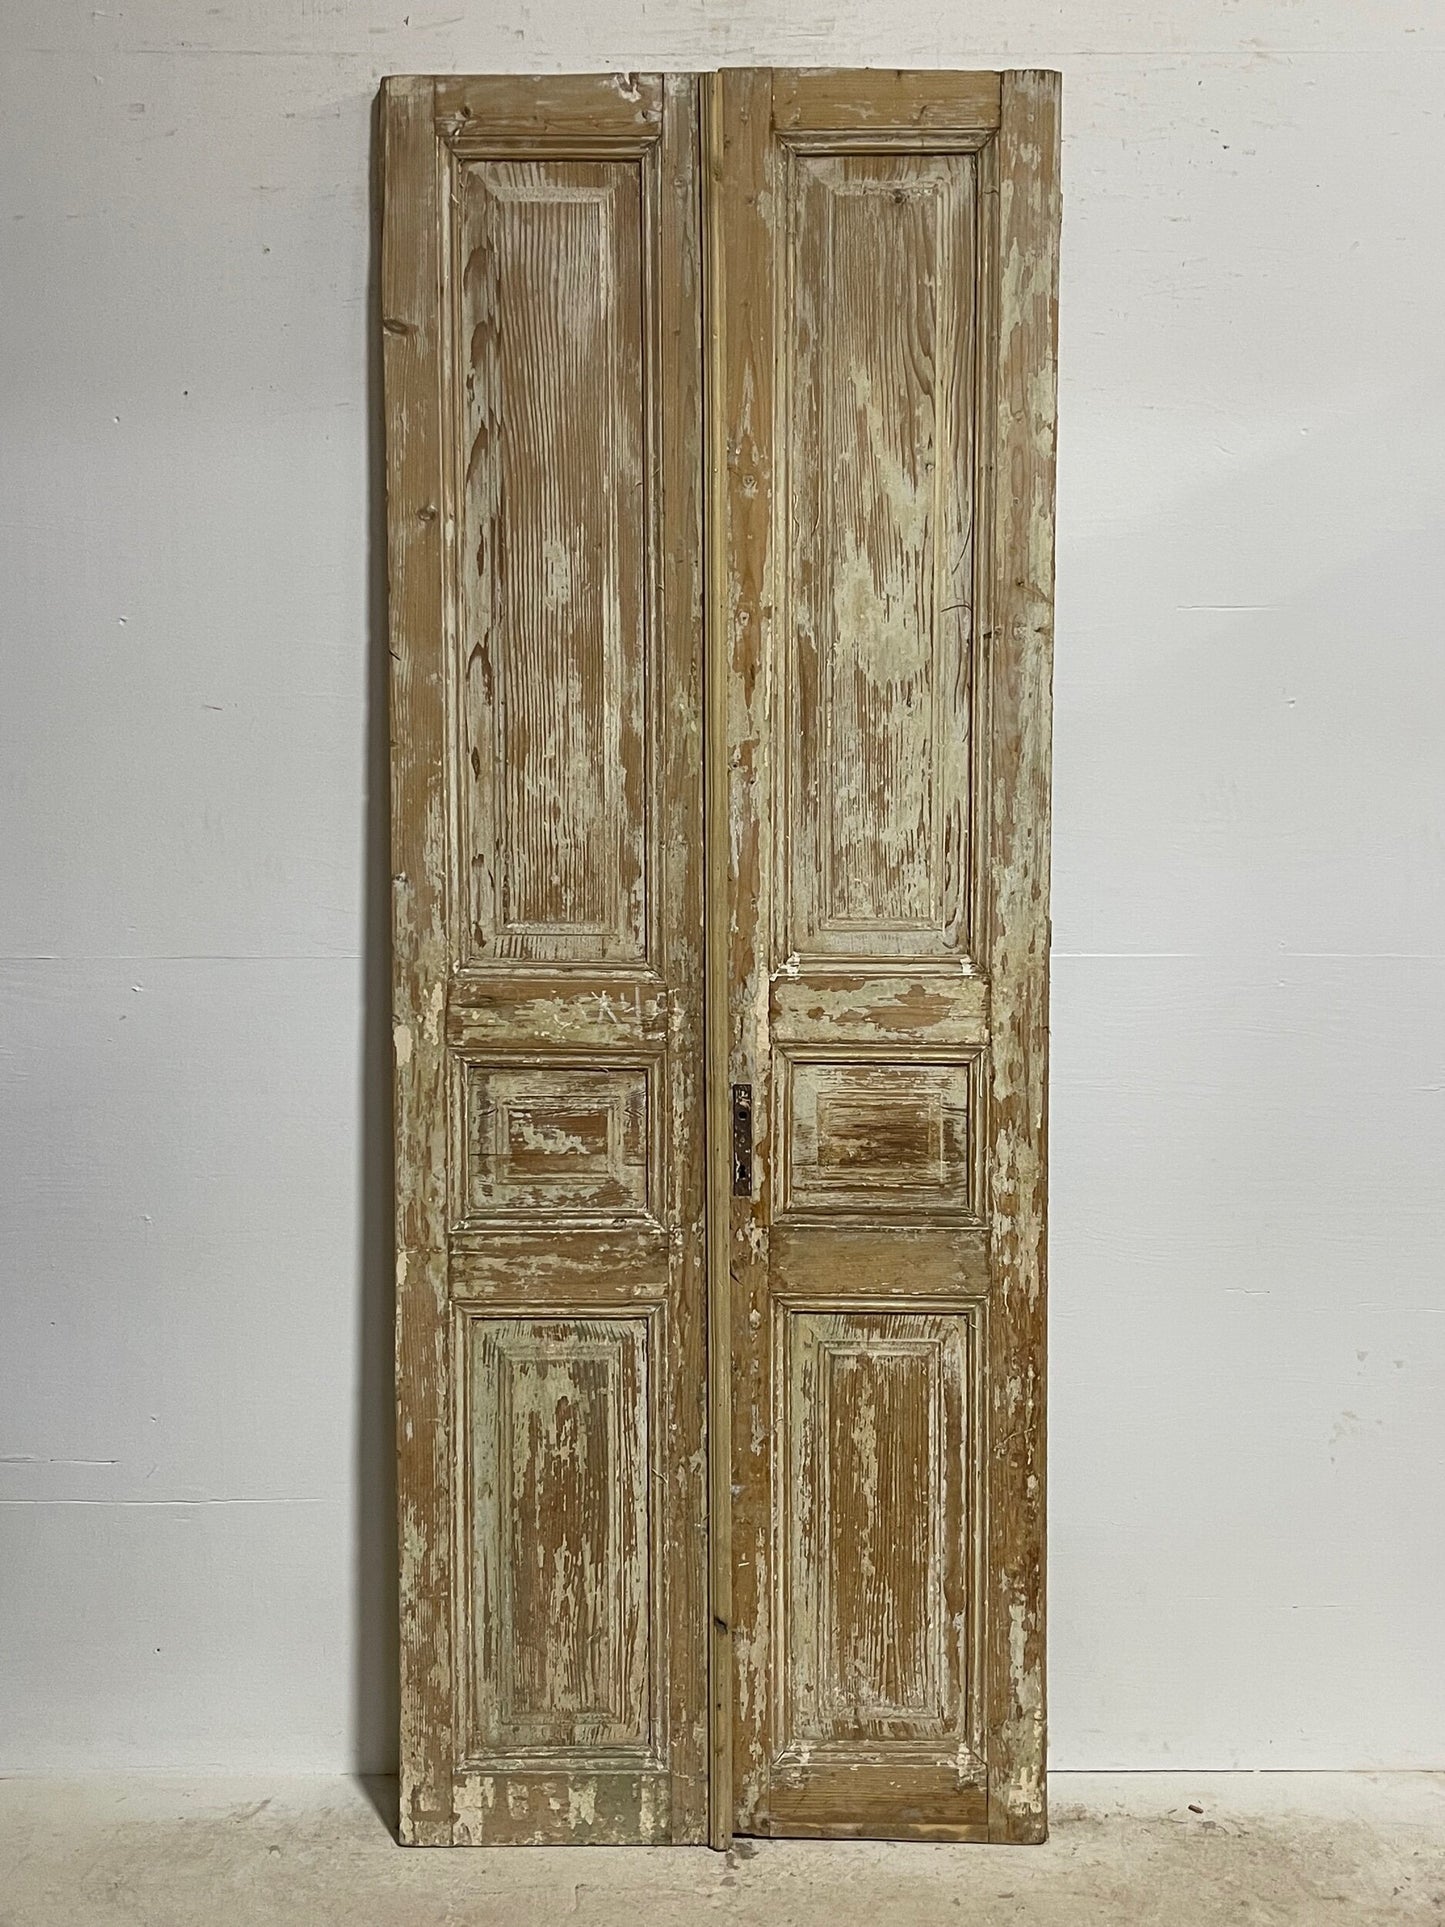 Antique French doors (94.75x35.5) h0151s